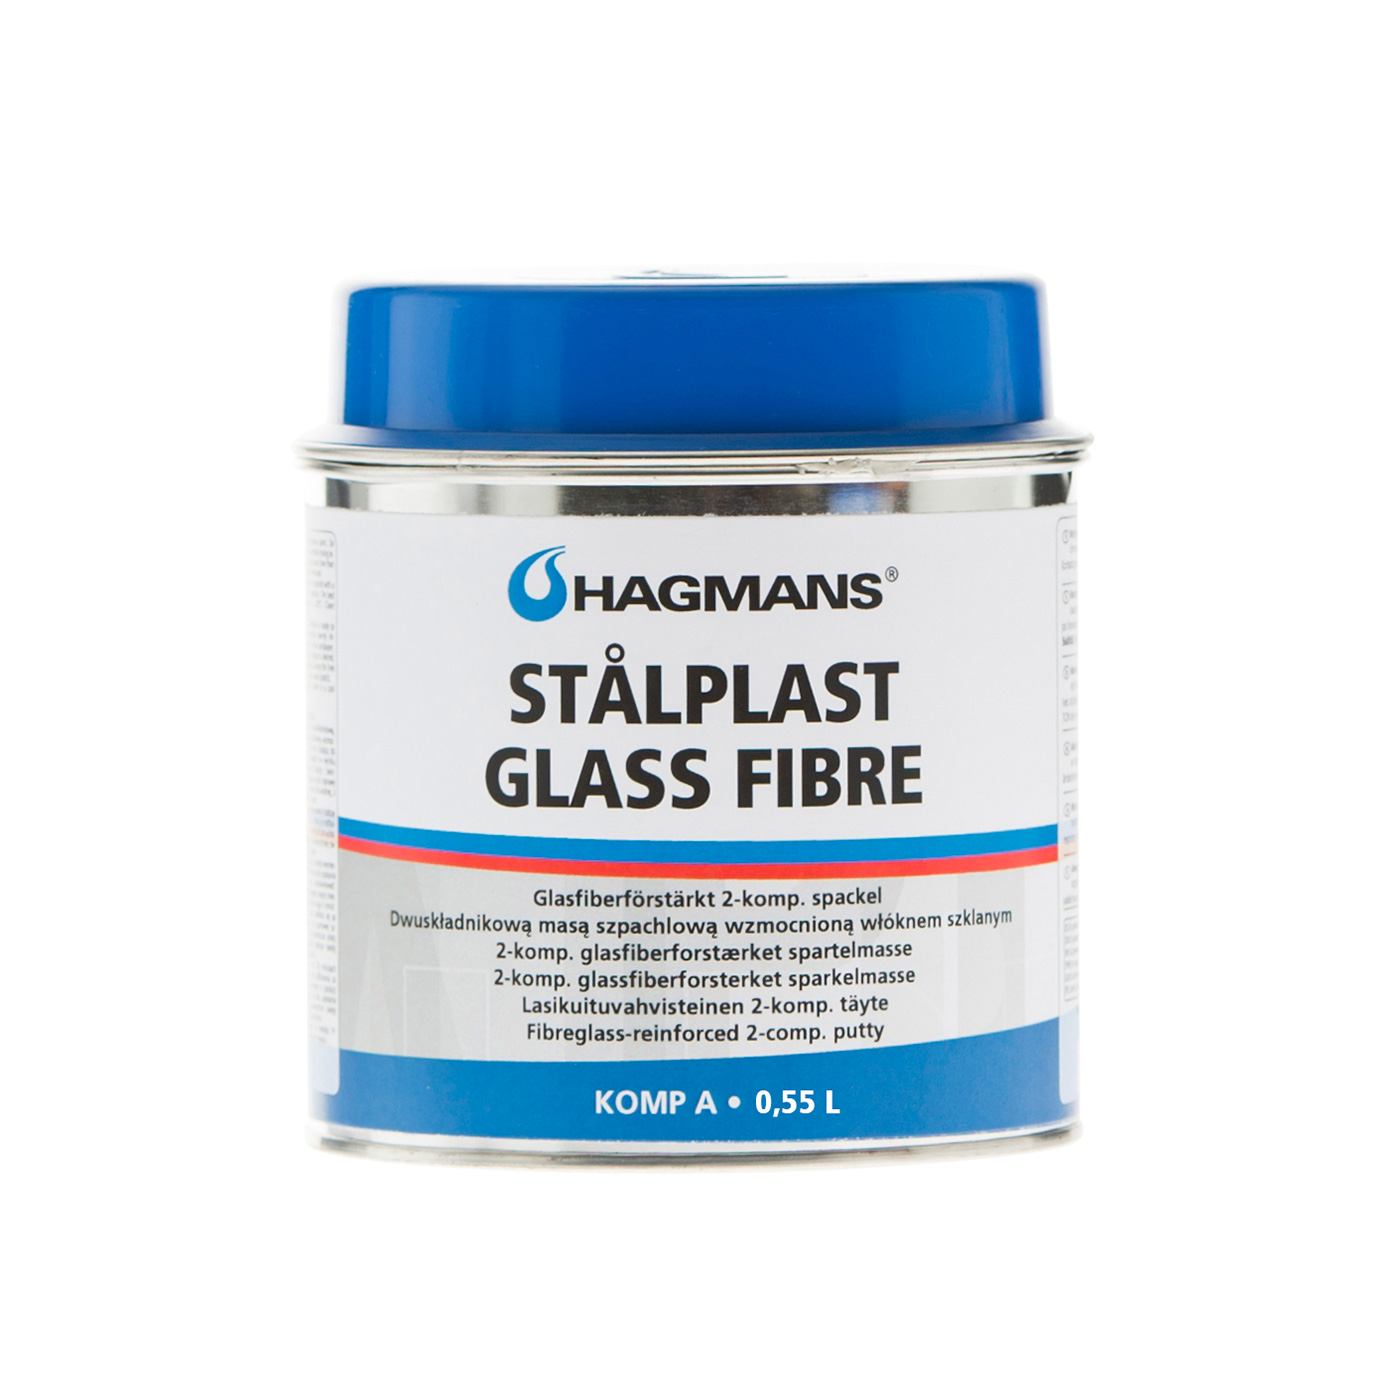 Hagmans Spackel Stålplast Glass Fibre HAG10841